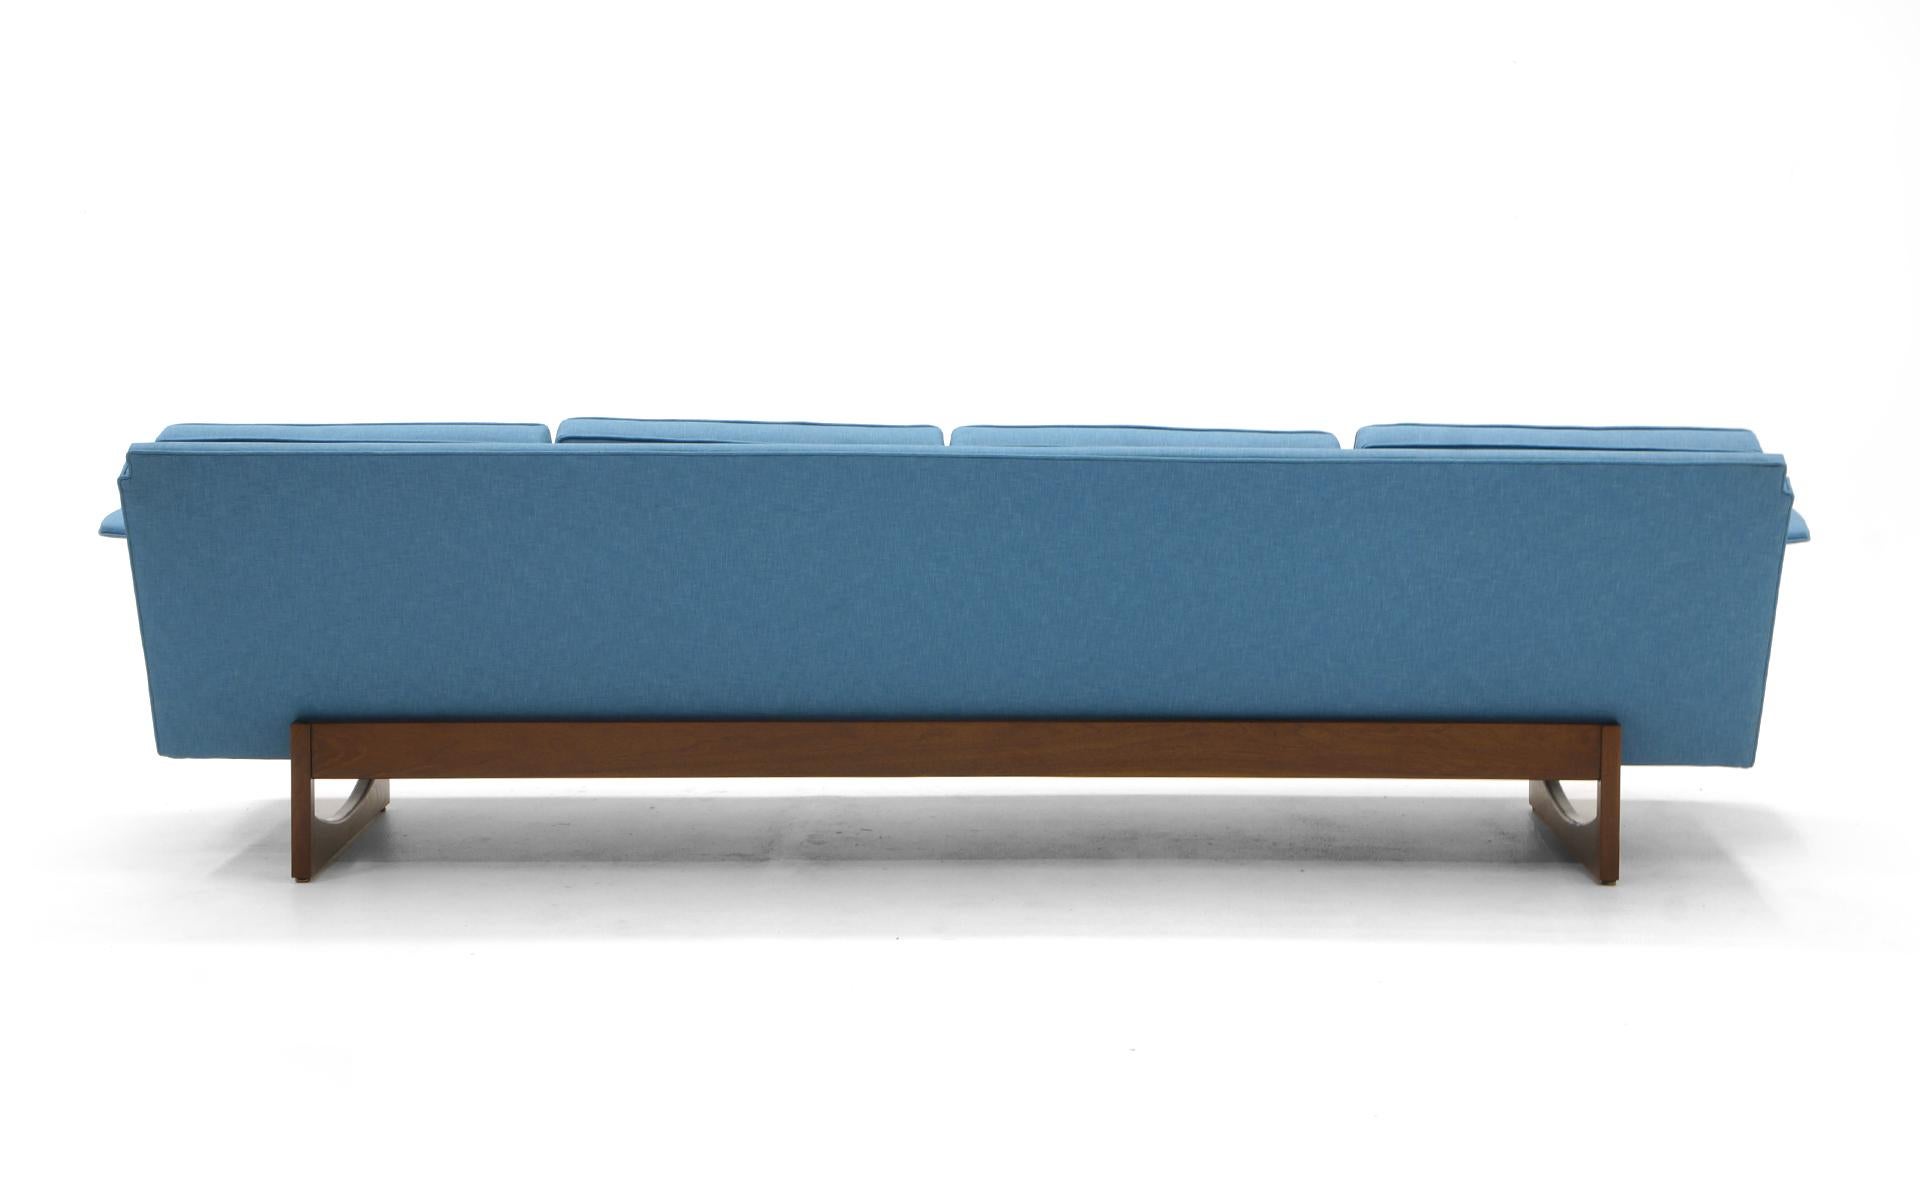 American Four-Seat Sofa Possibly Danish Modern or Adrian Pearsall, Beautiful Blue Fabric